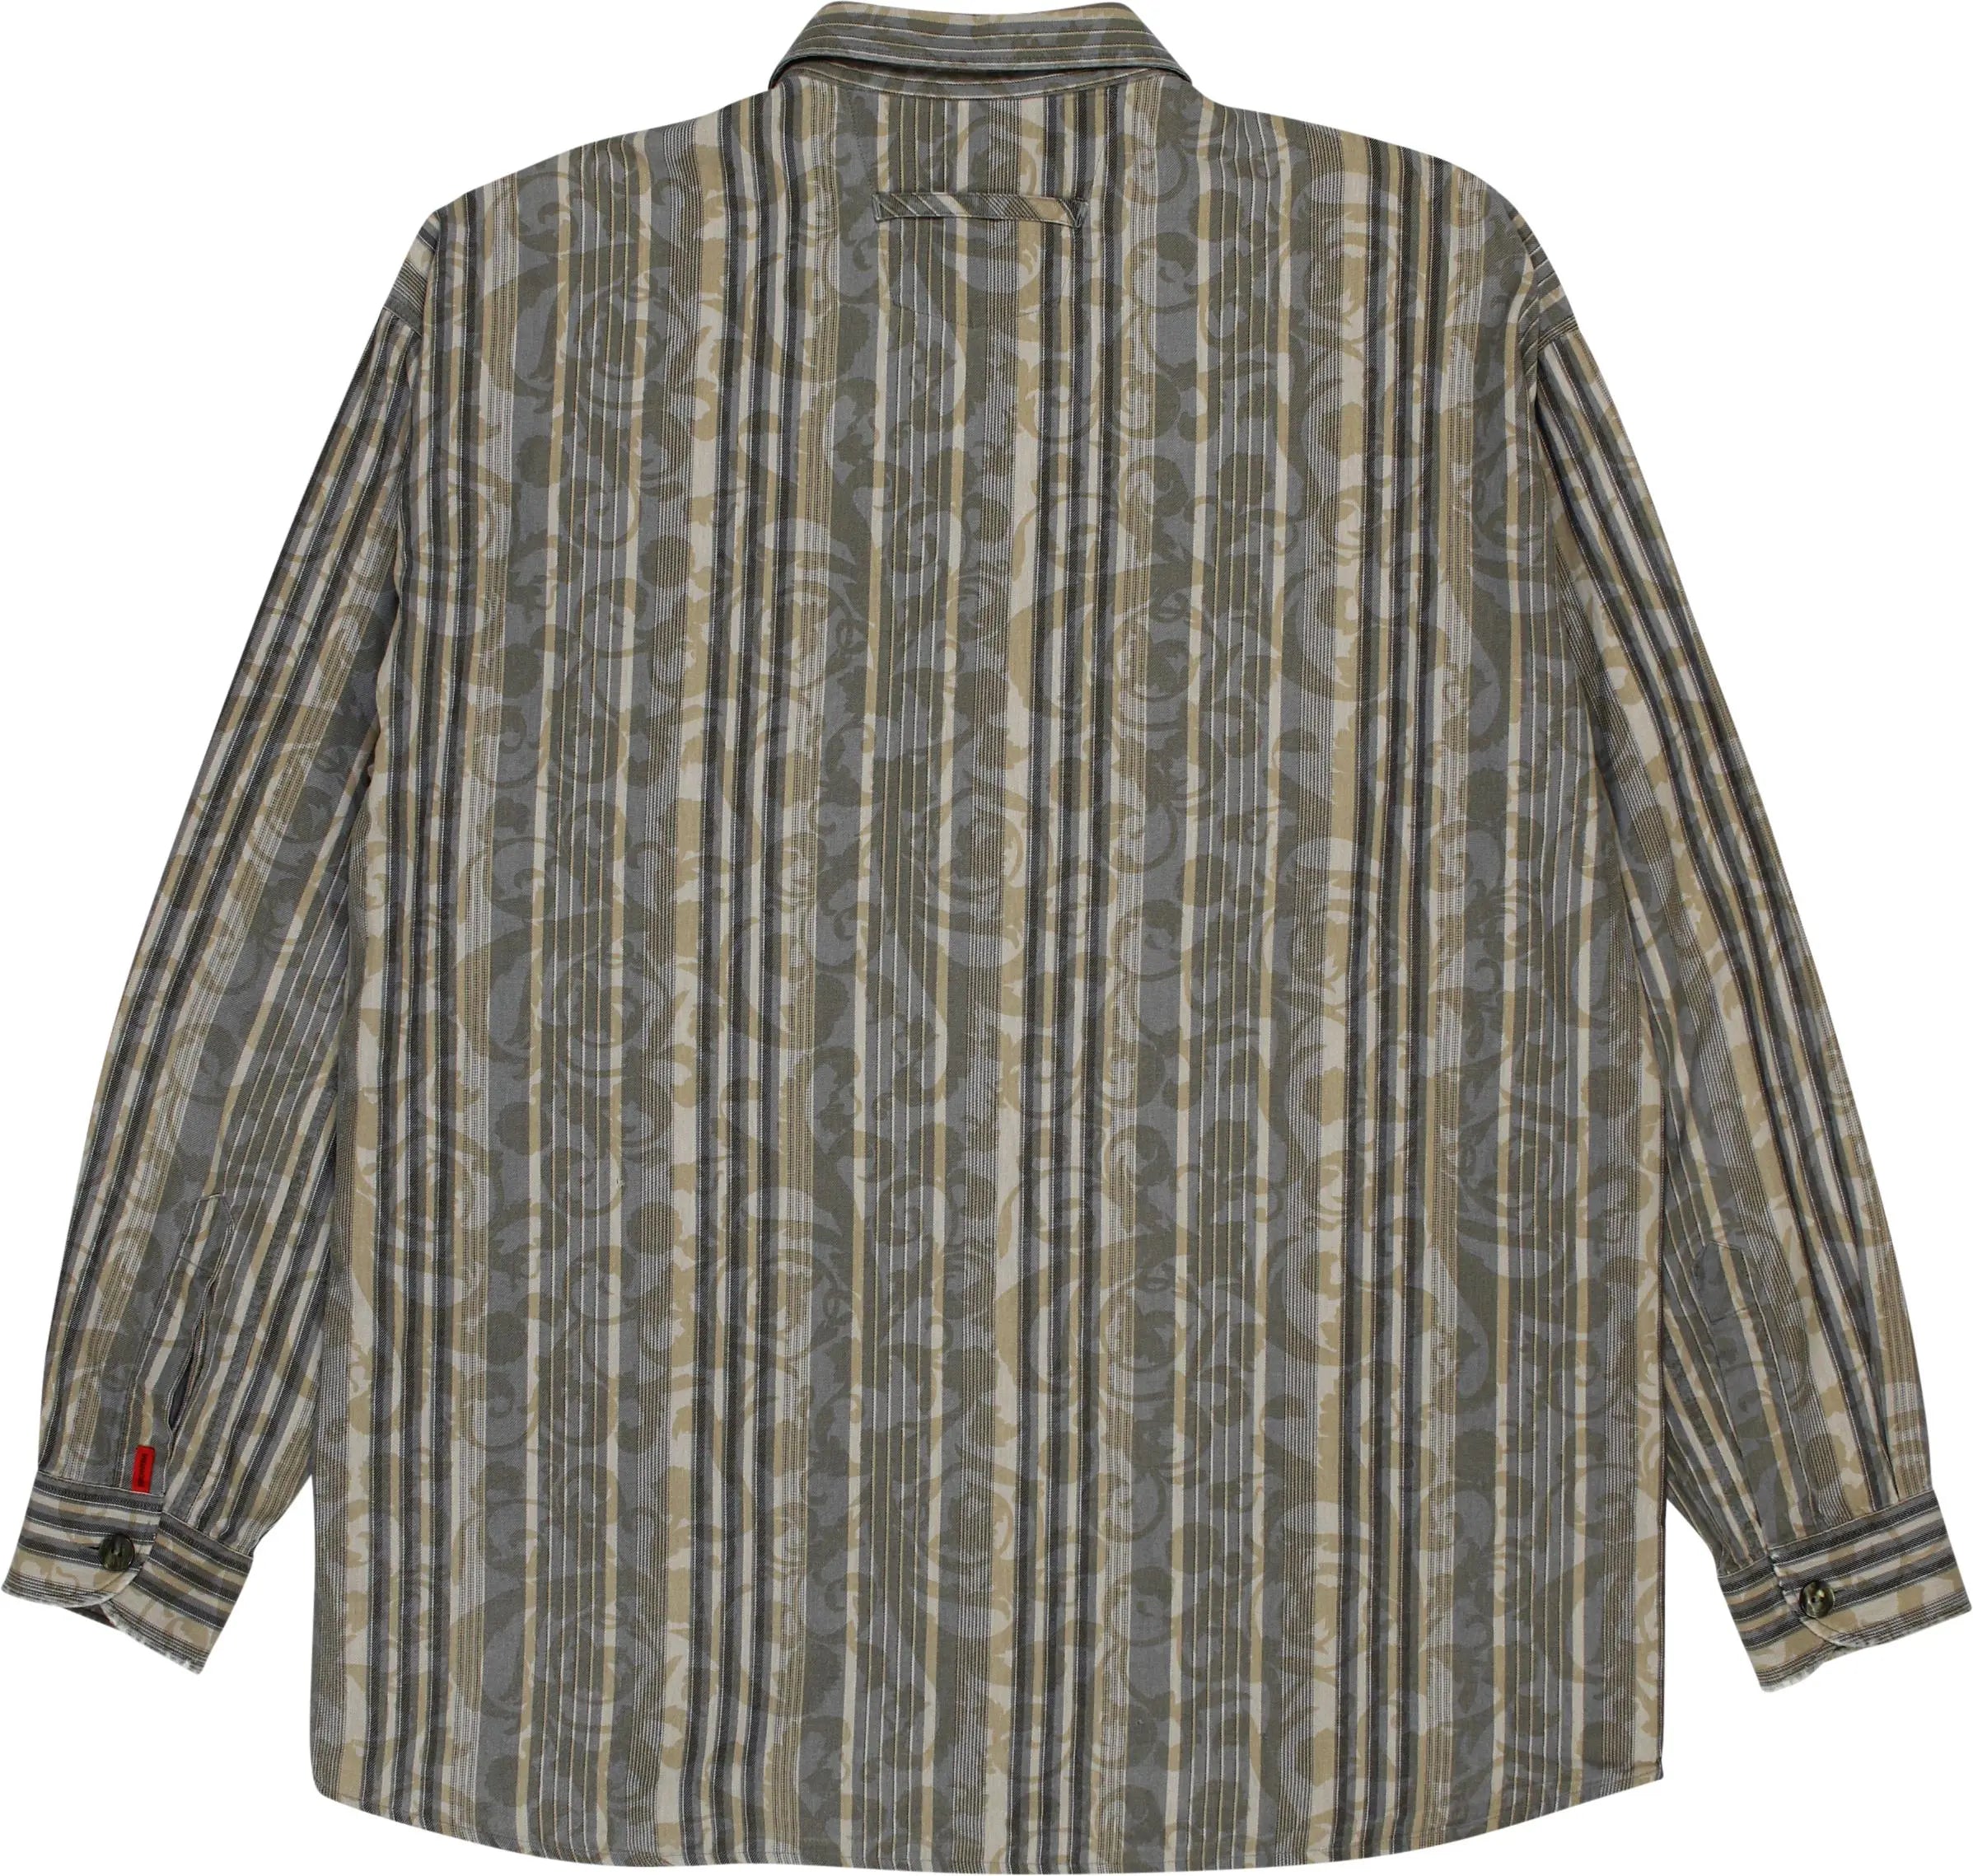 Signum - Vintage Patterned Shirt- ThriftTale.com - Vintage and second handclothing